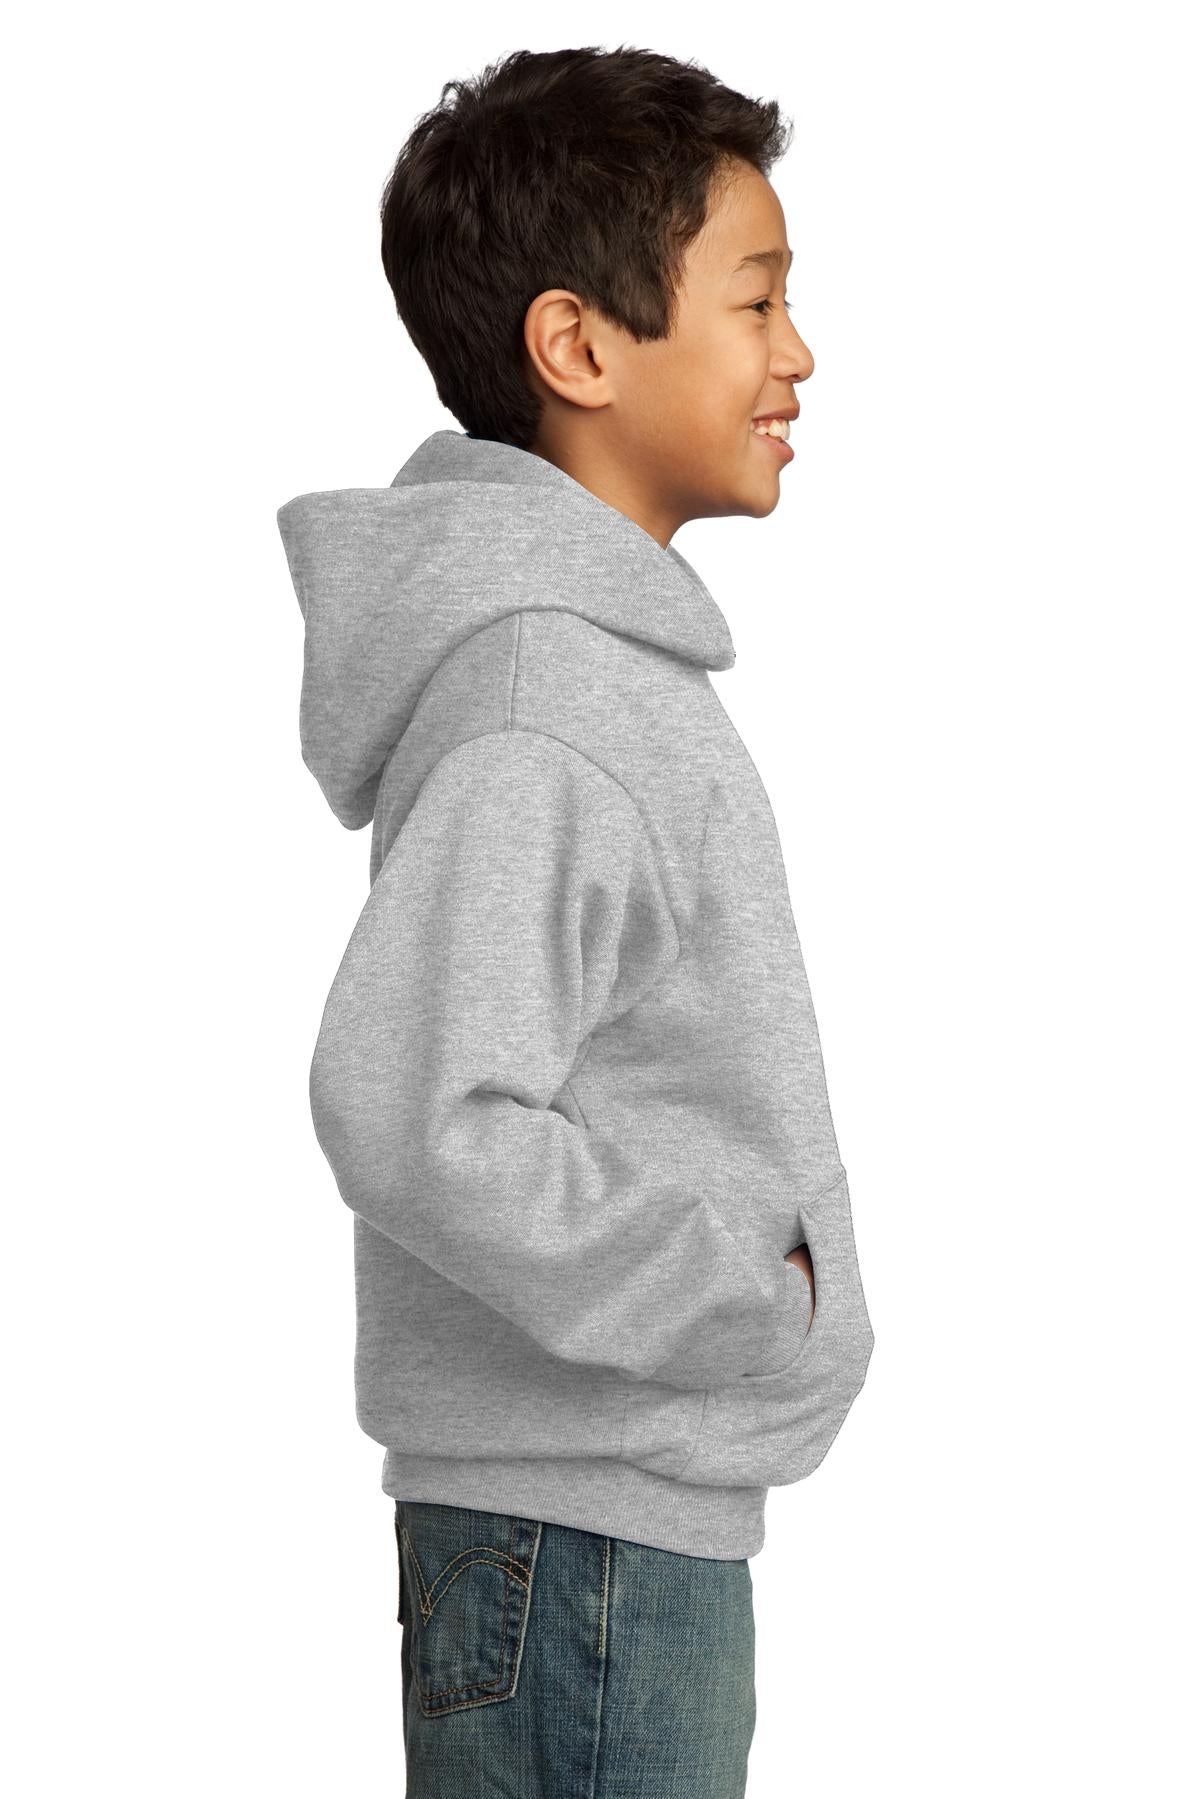 Port & Company - Youth Core Fleece Pullover Hooded Sweatshirt. PC90YH - Ash